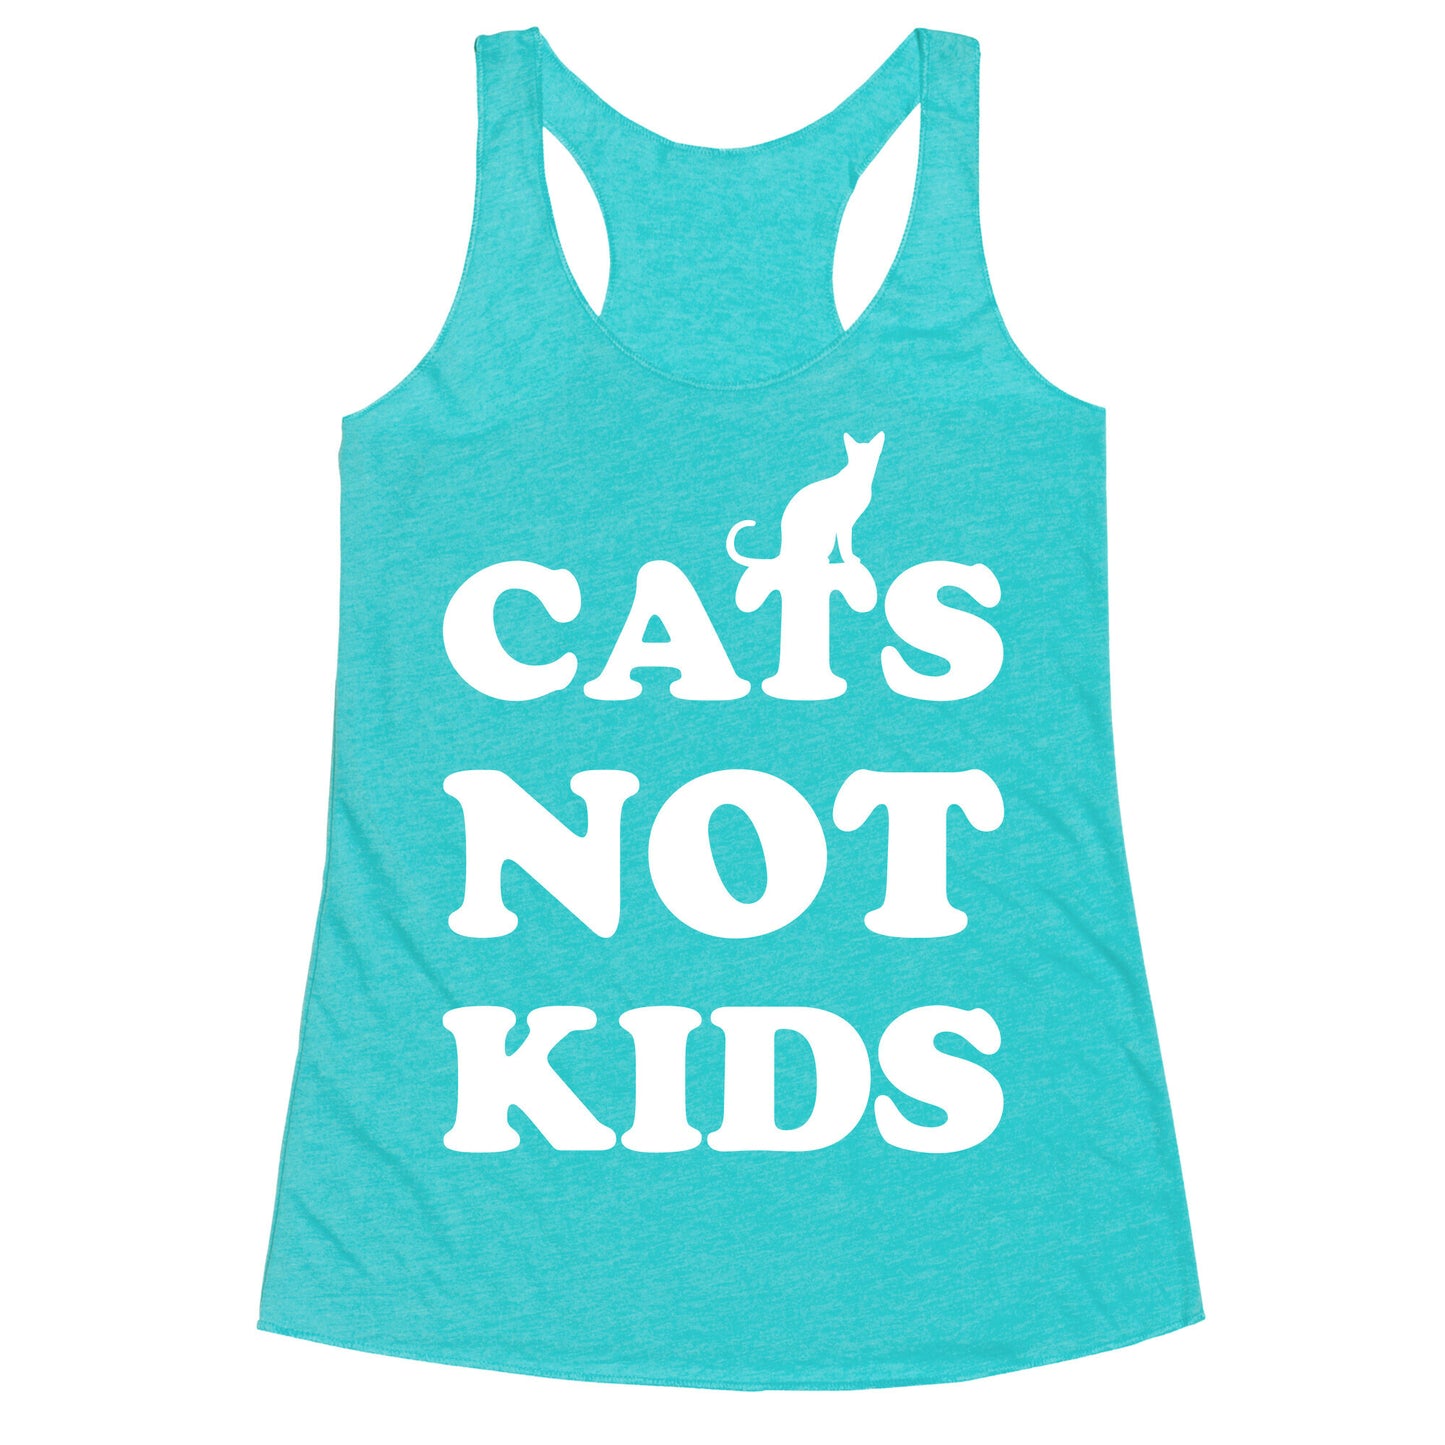 Cats Not Kids Racerback Tank